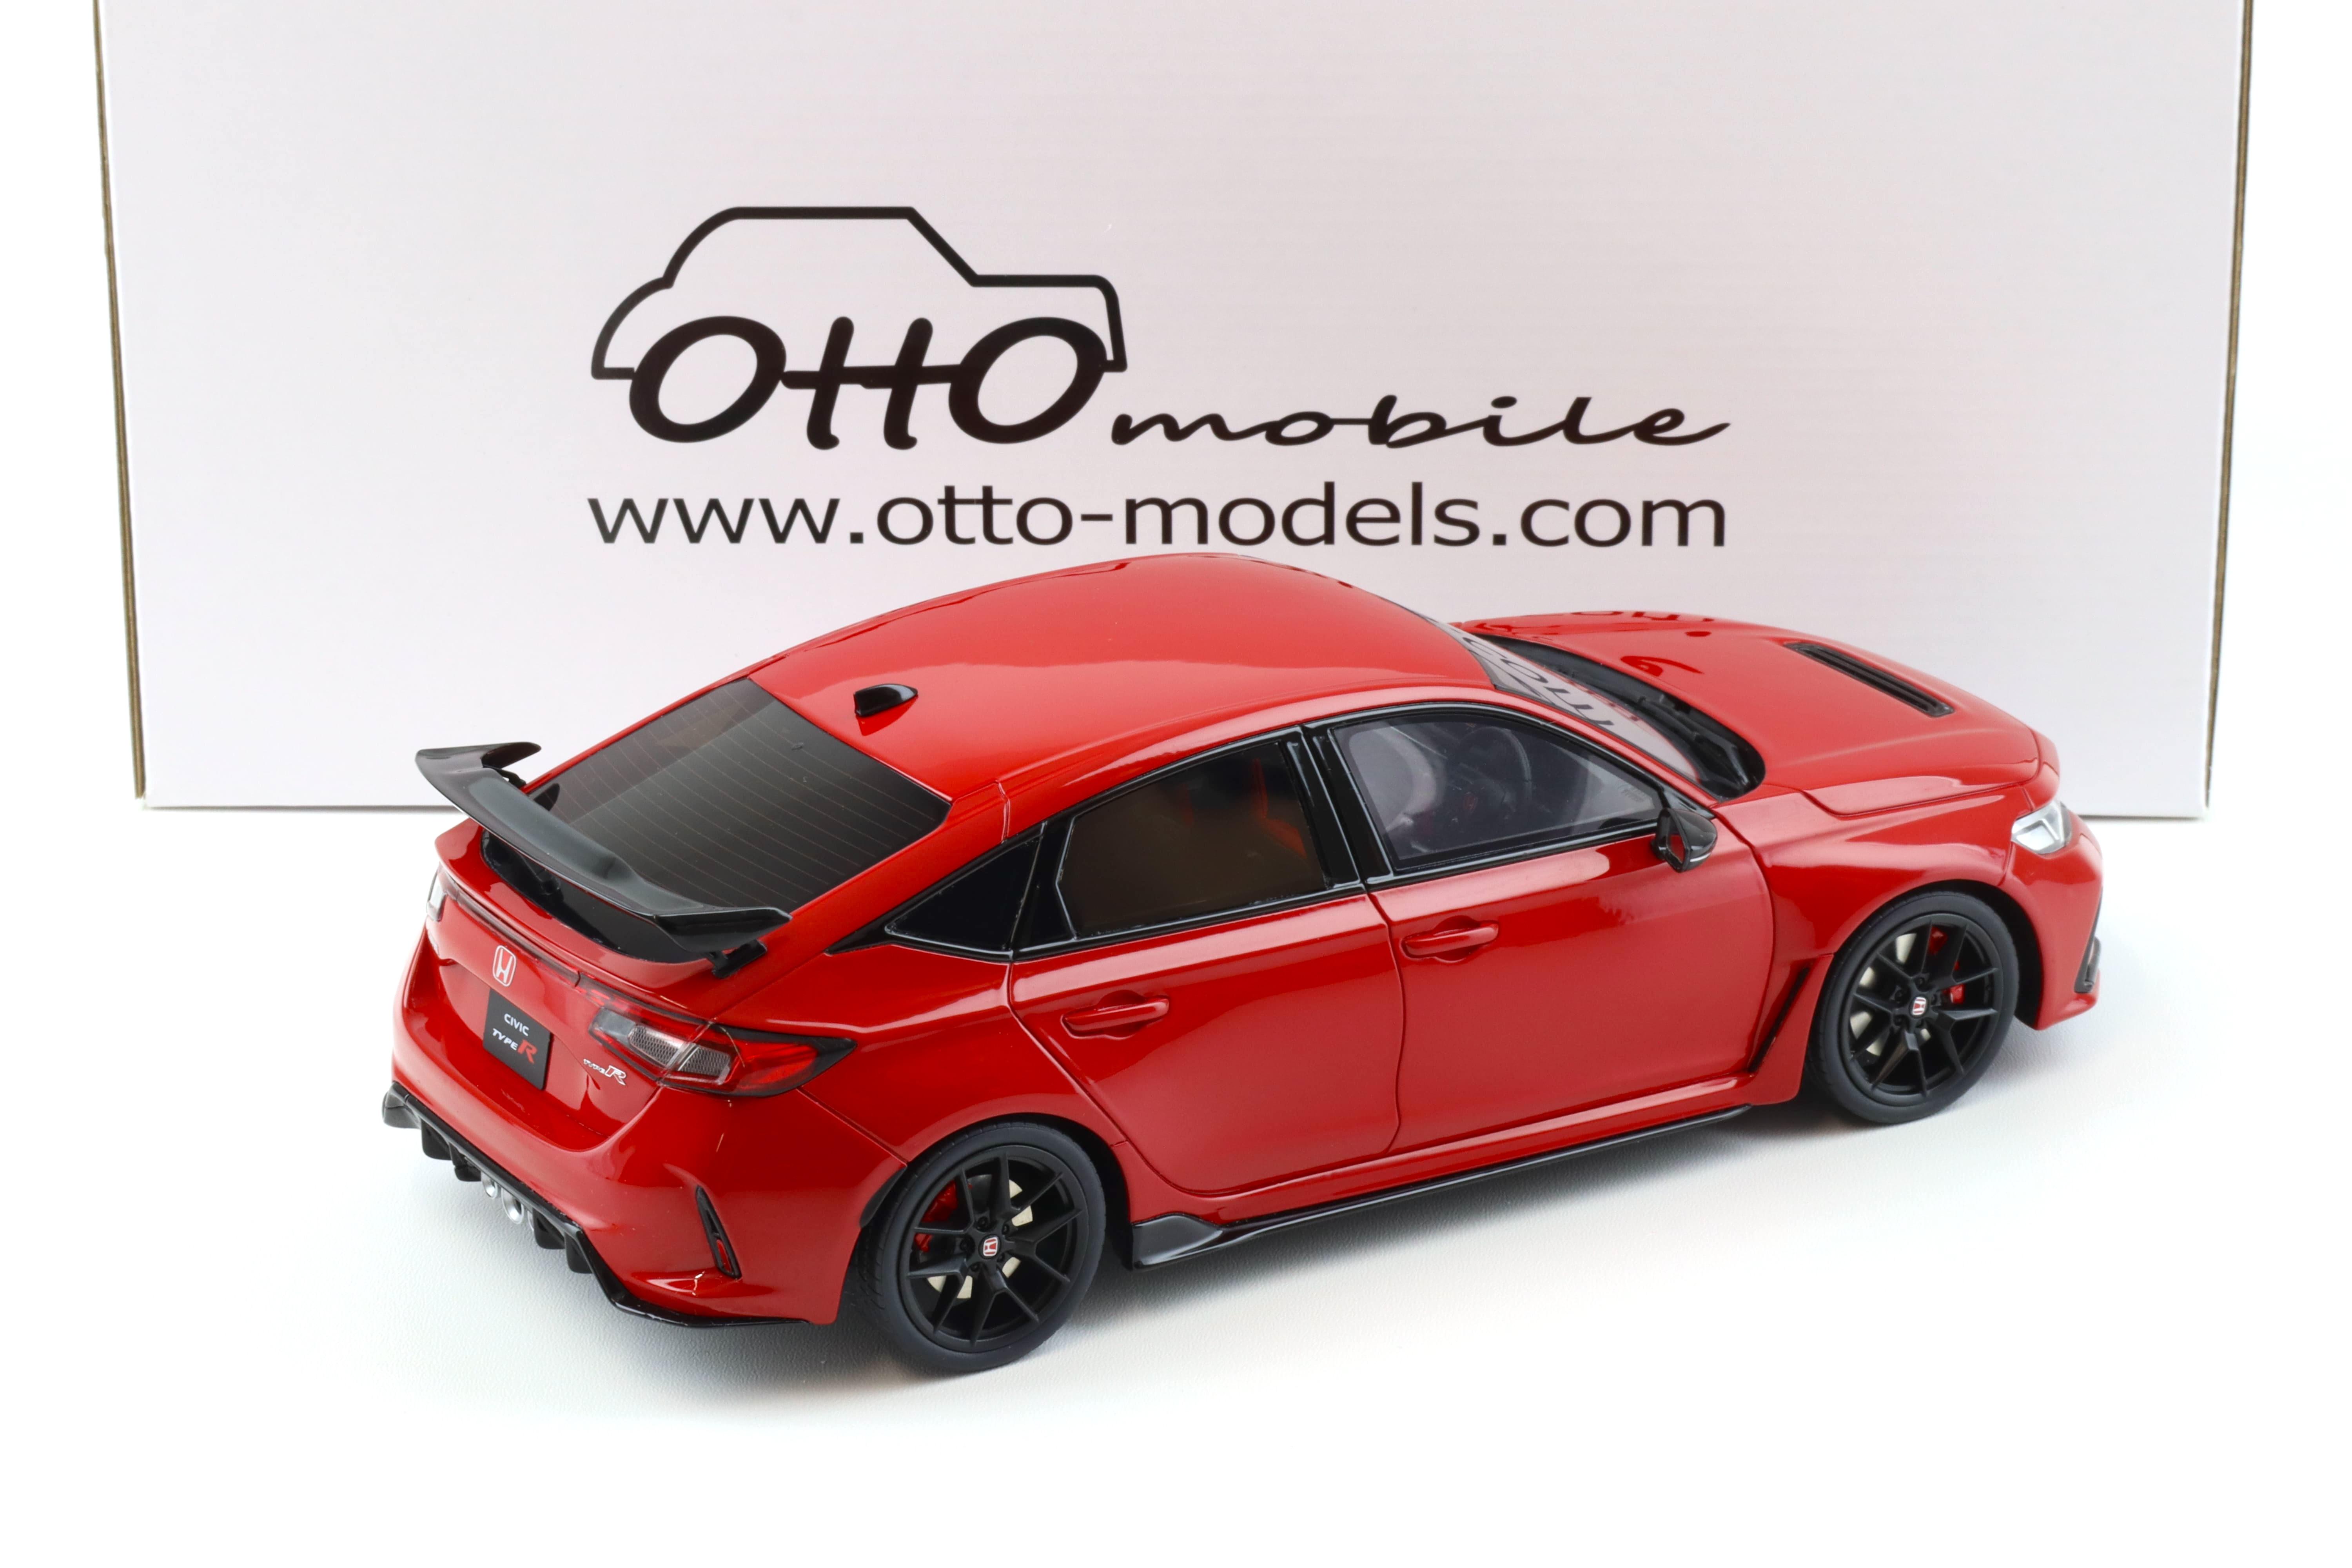 1:18 OTTO mobile OT440 Honda Civic Type R 2022 Rallye red